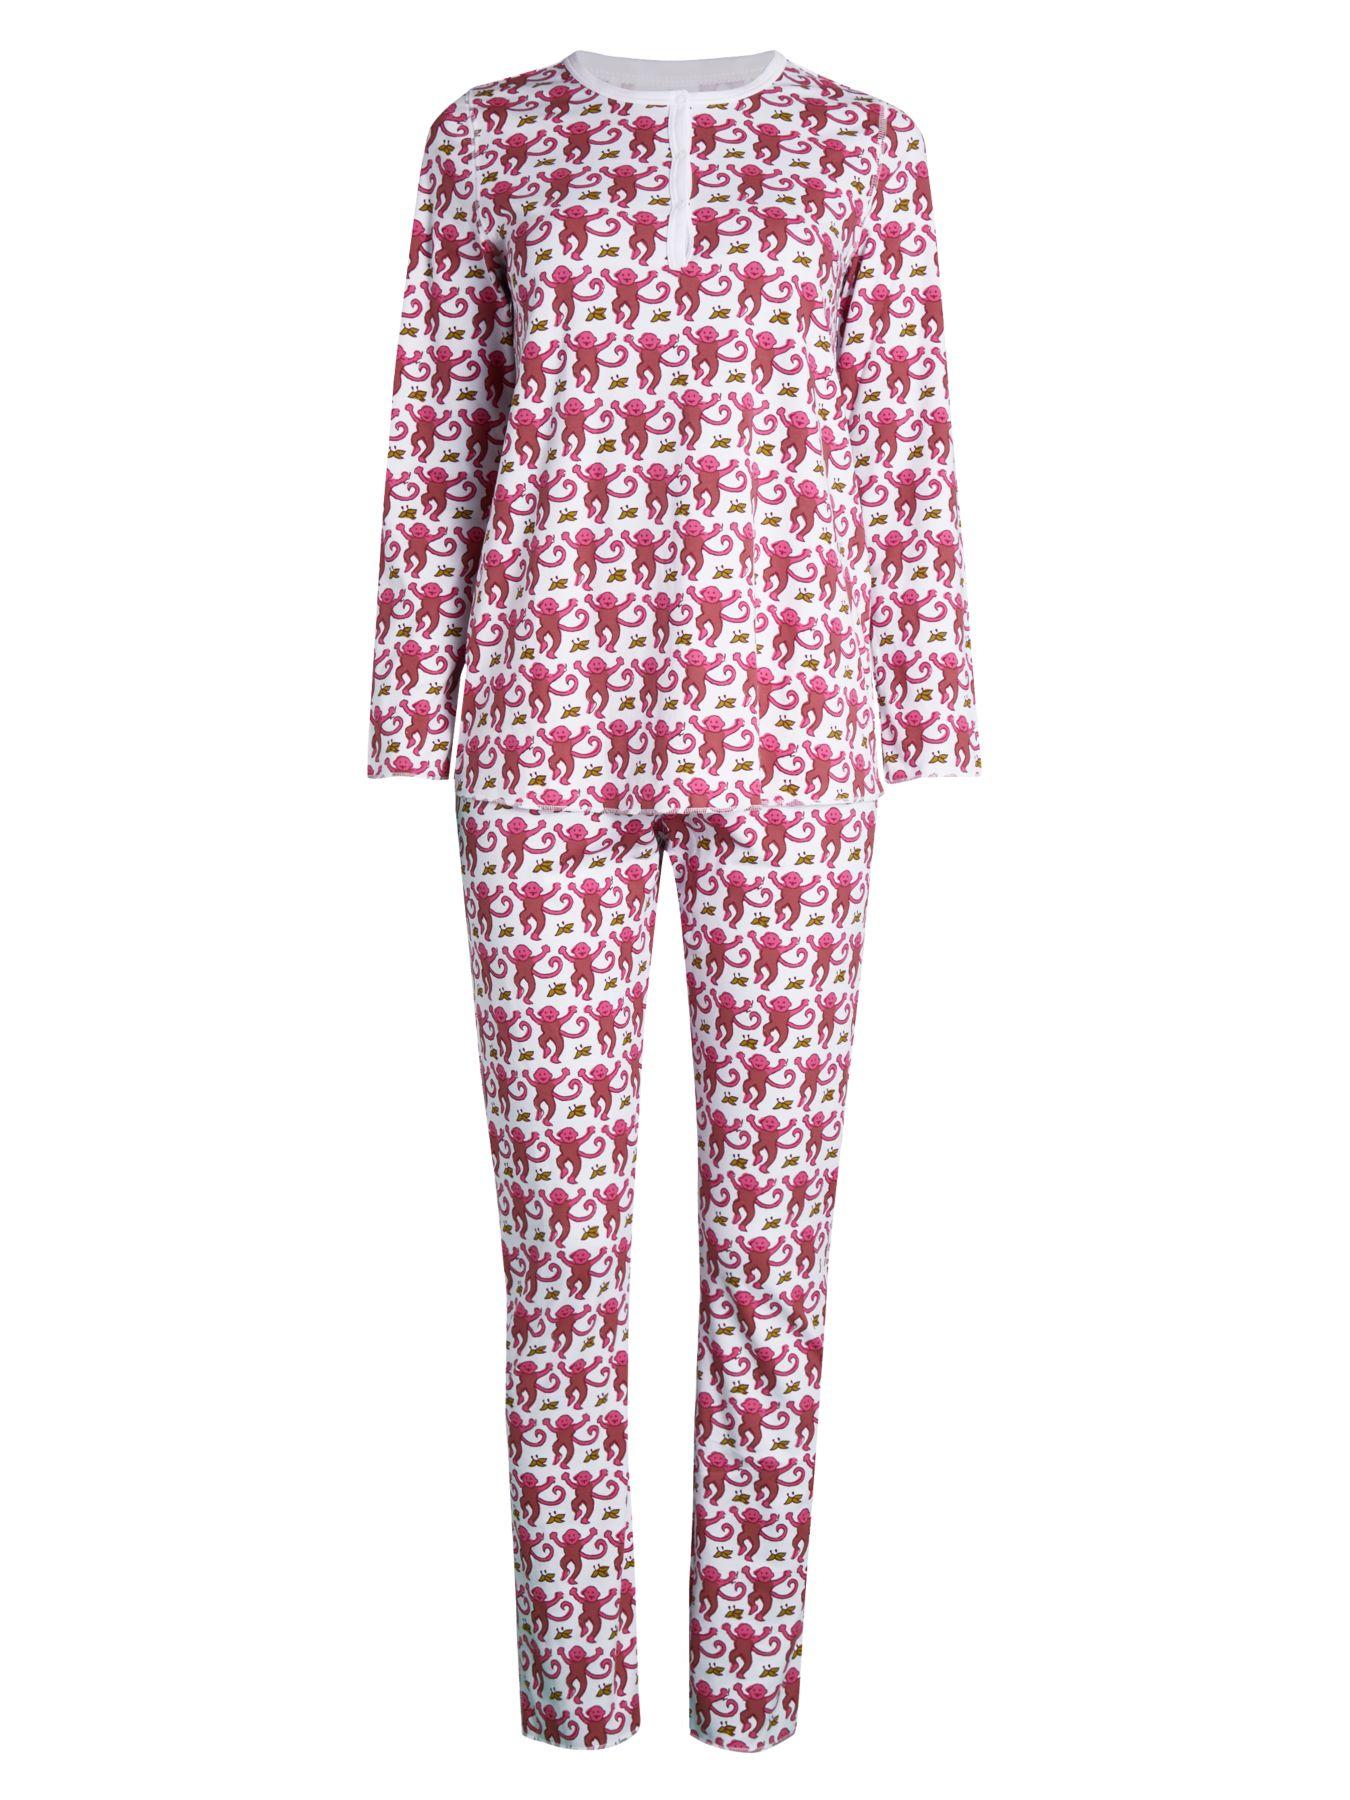 Roberta Roller Rabbit Cotton Monkey Print 2-piece Pajama Set in Pink - Lyst